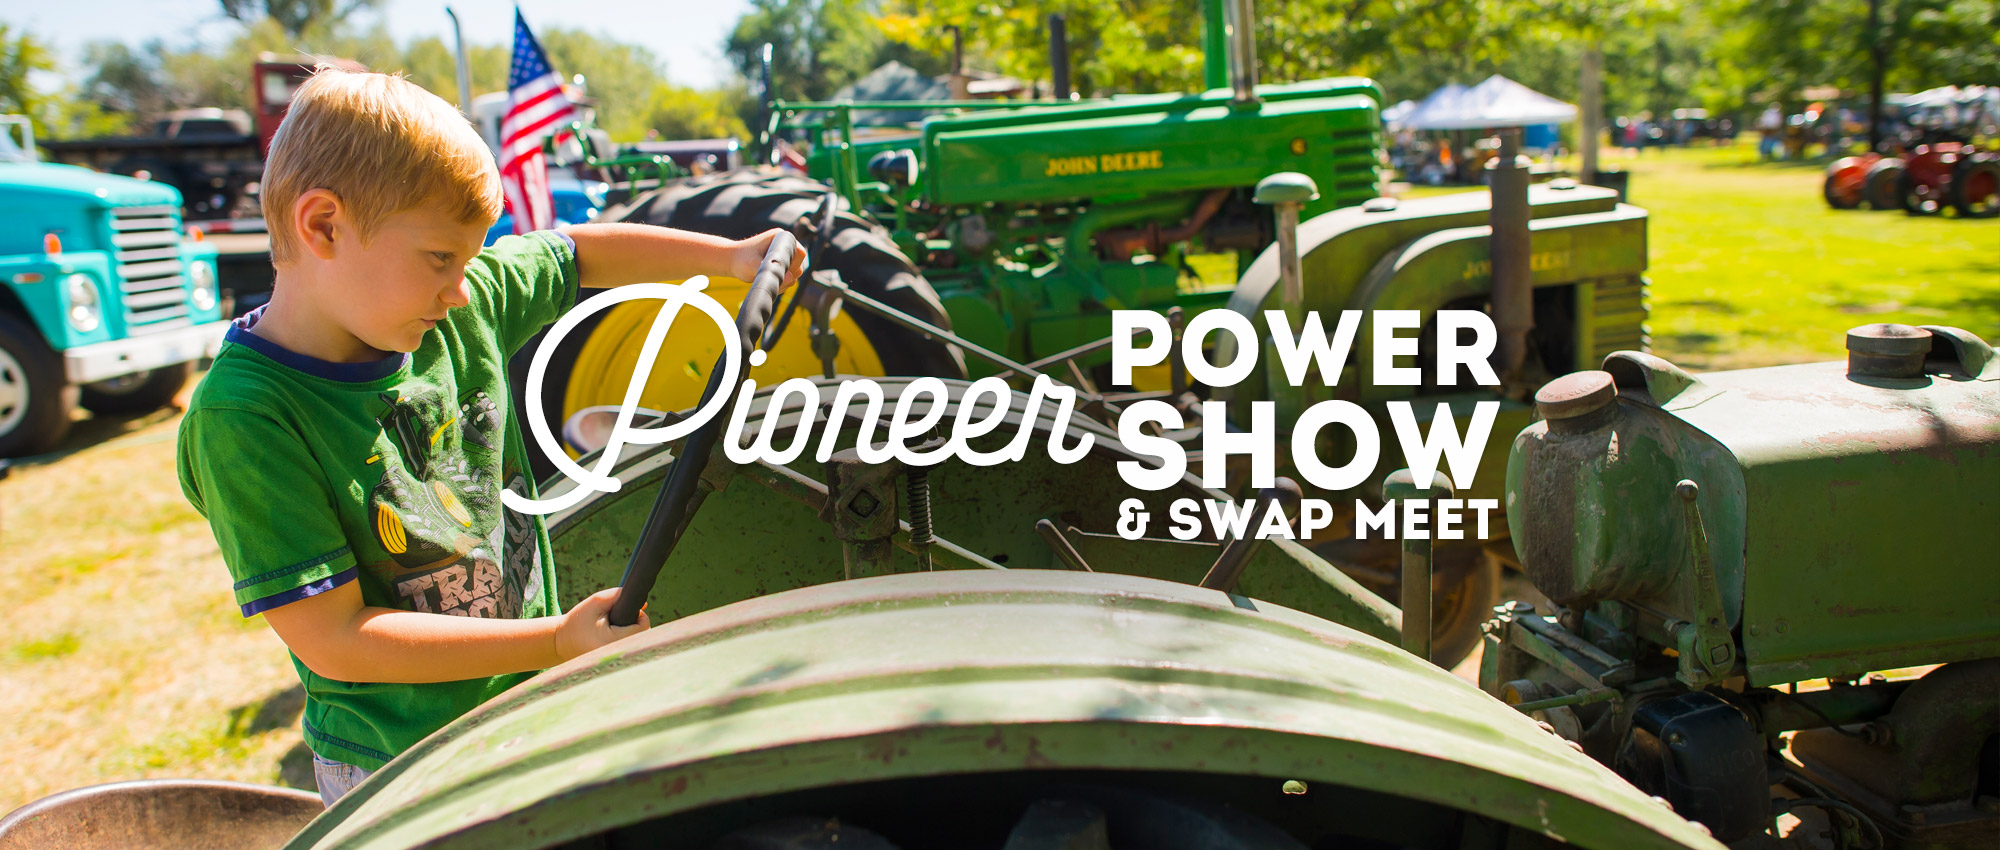 Pioneer Power Show and Swap Meet - Union Gap, WA - Union Gap, WA